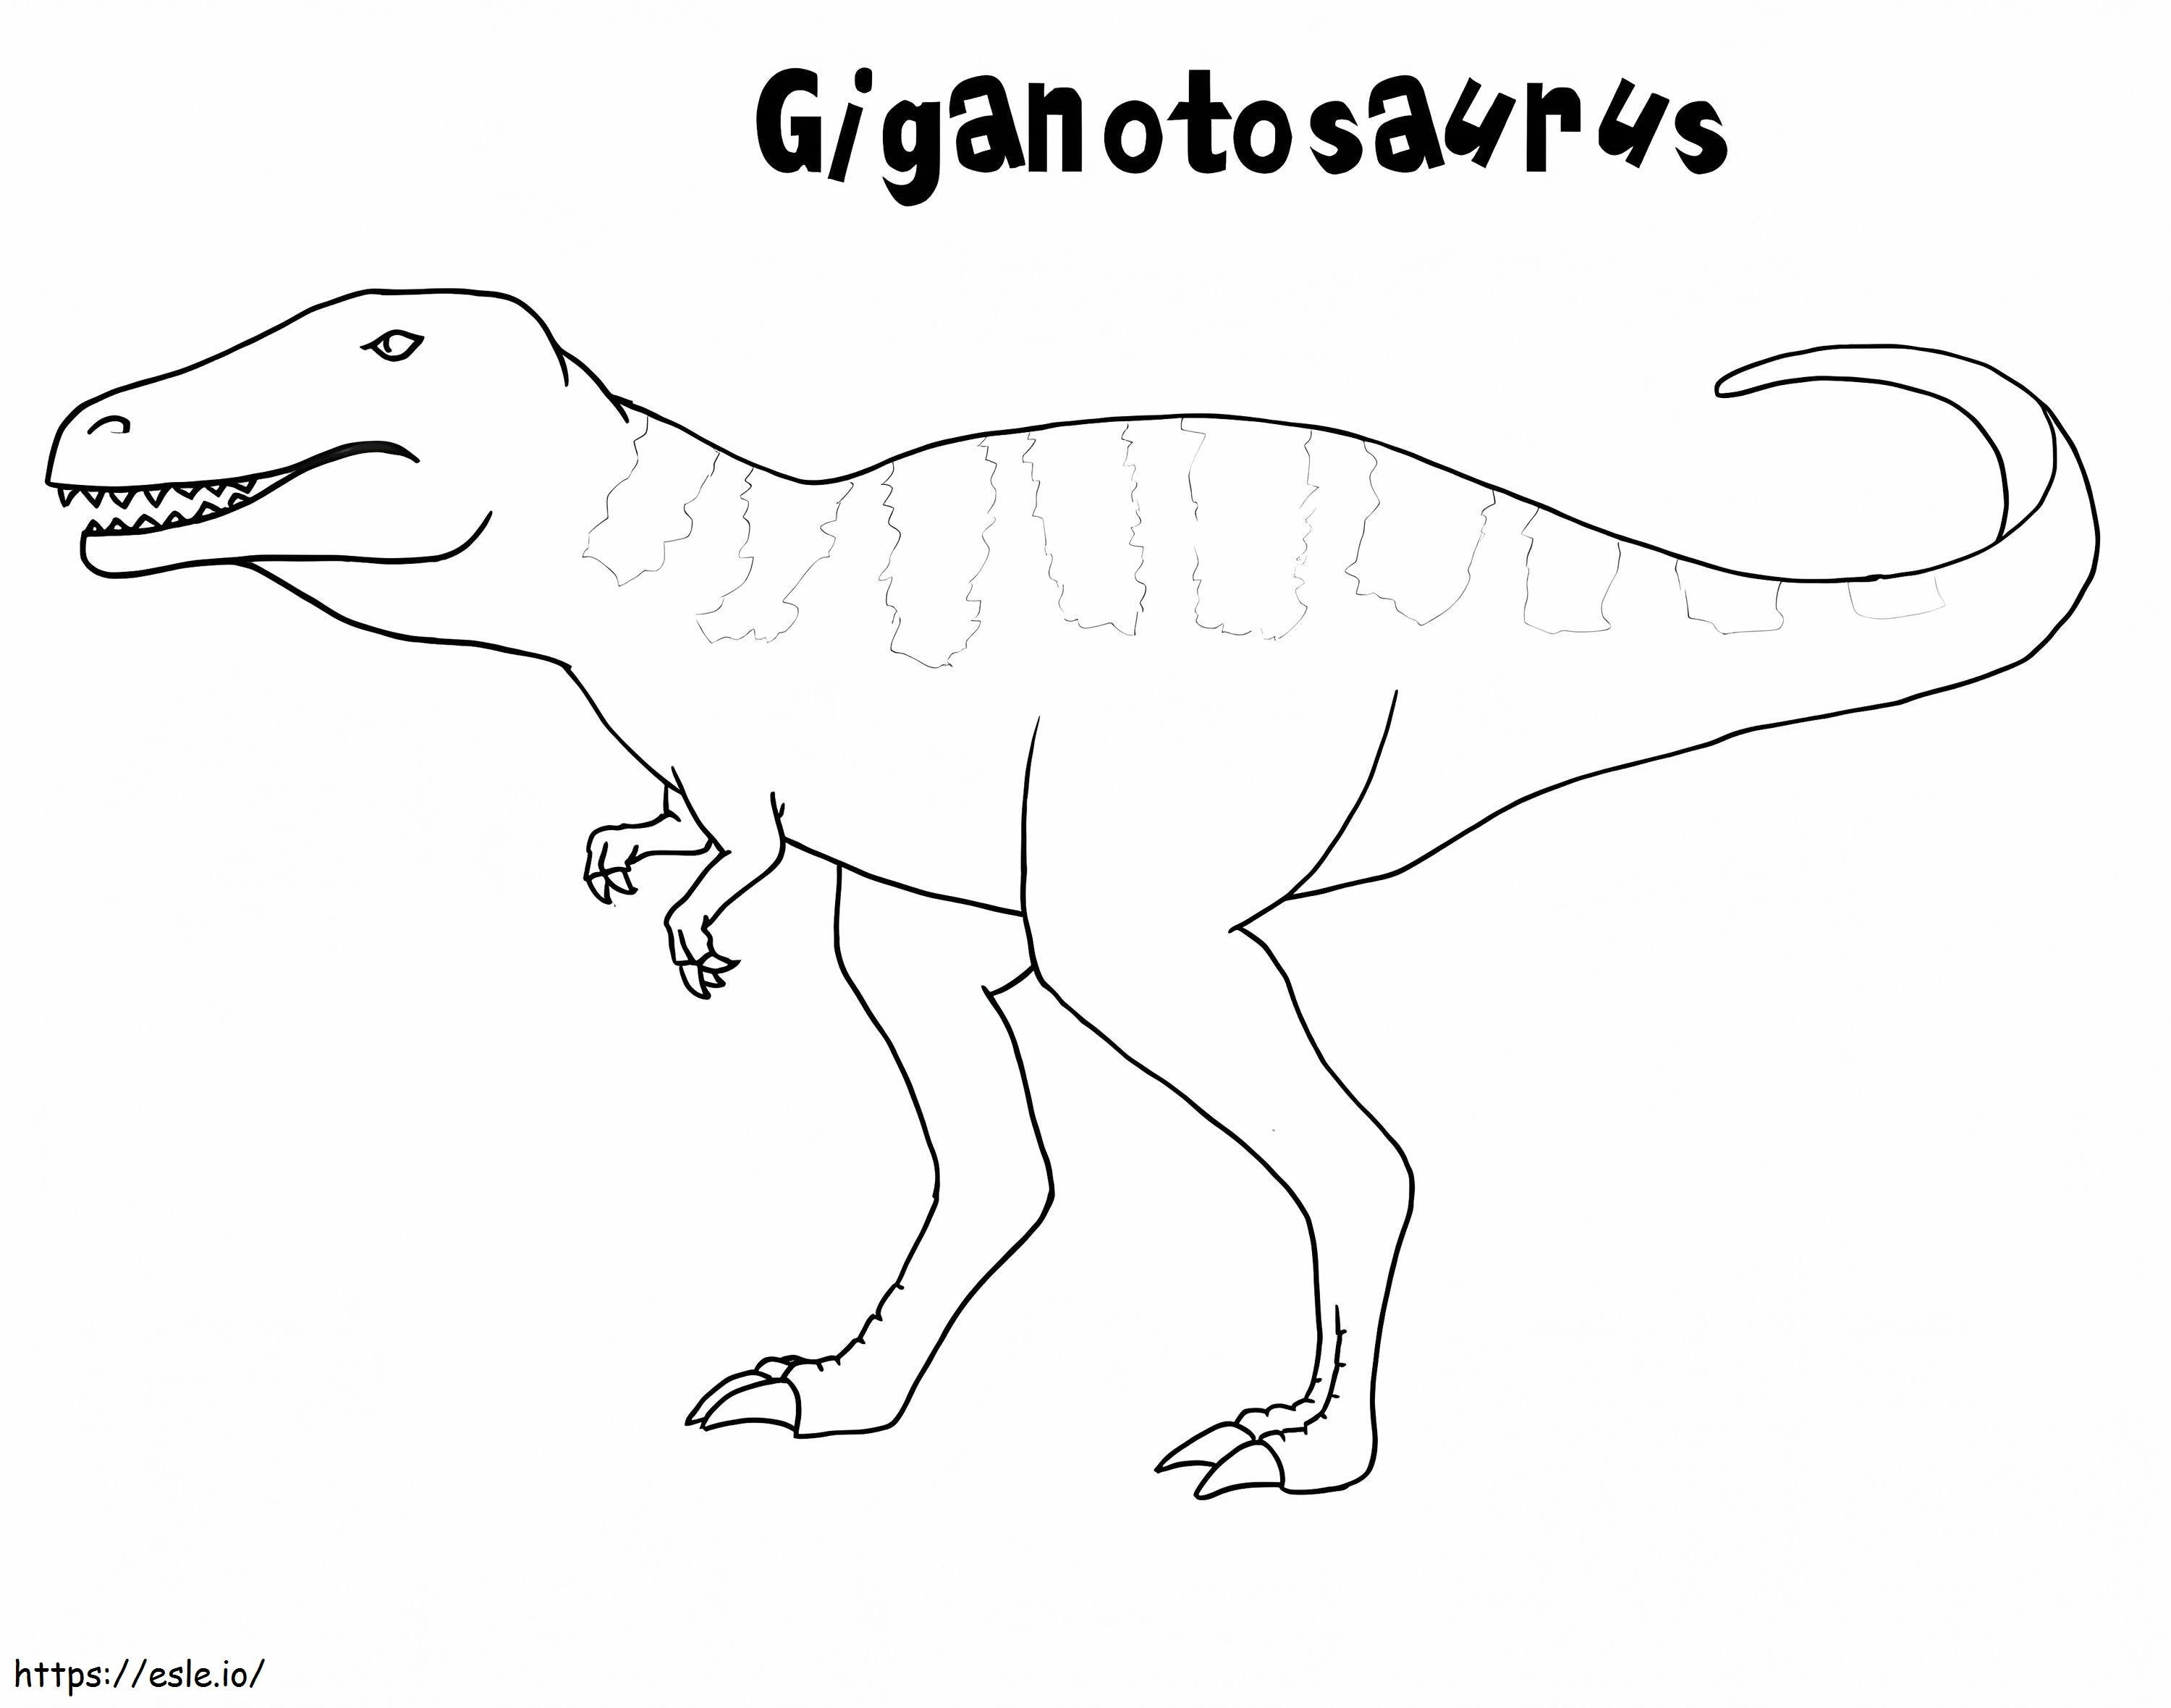 Giganotosaurus ușor de colorat